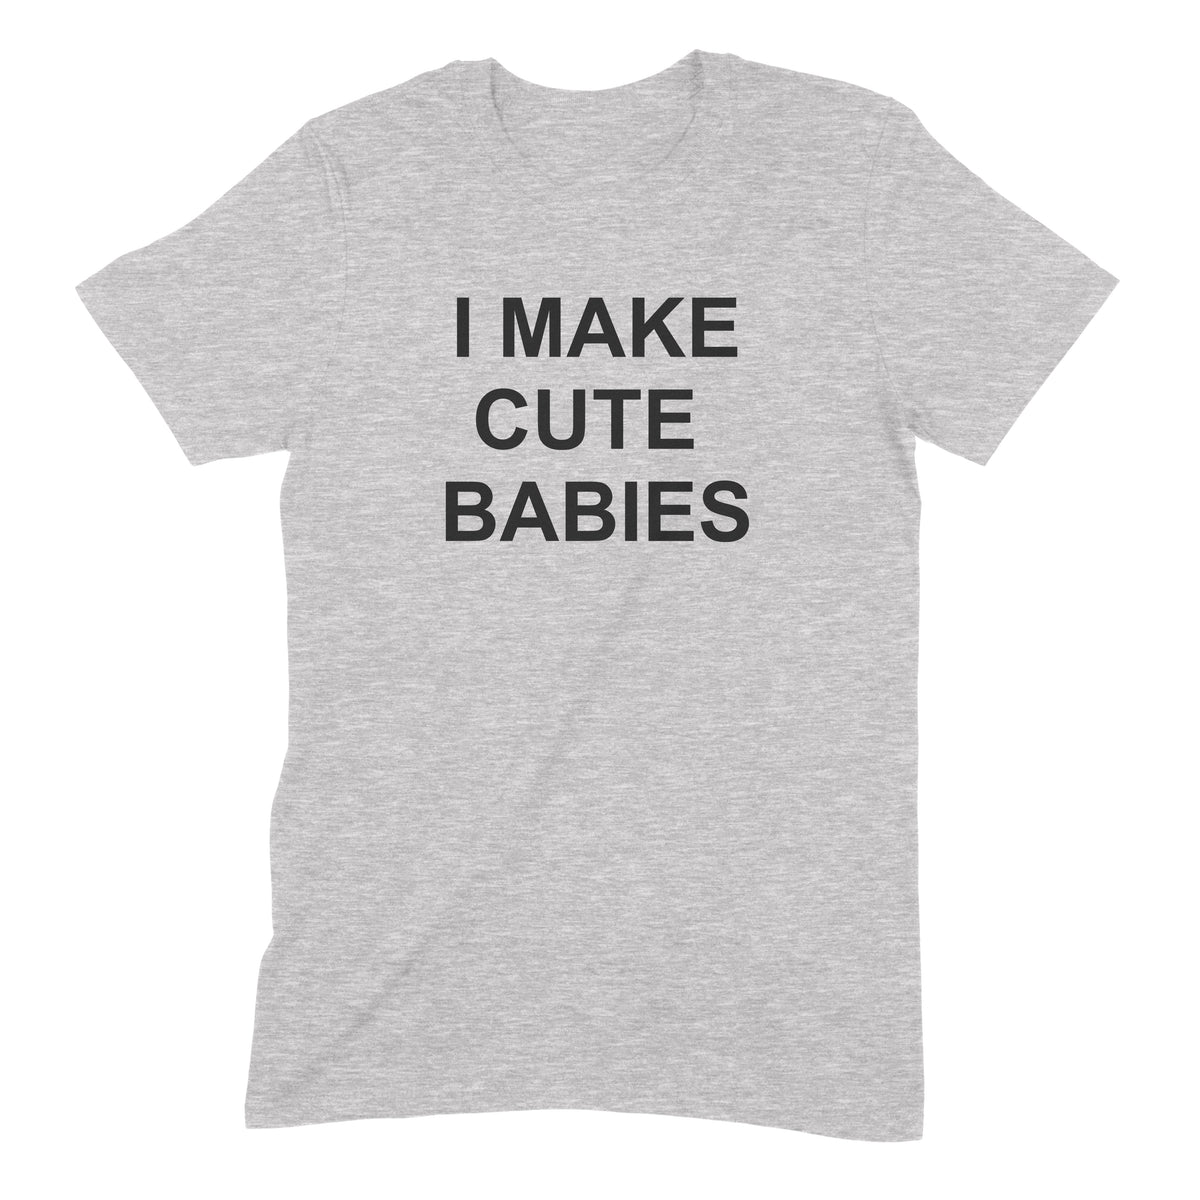 "I Make Cute Babies" Premium Midweight Ringspun Cotton T-Shirt - Mens/Womens Fits